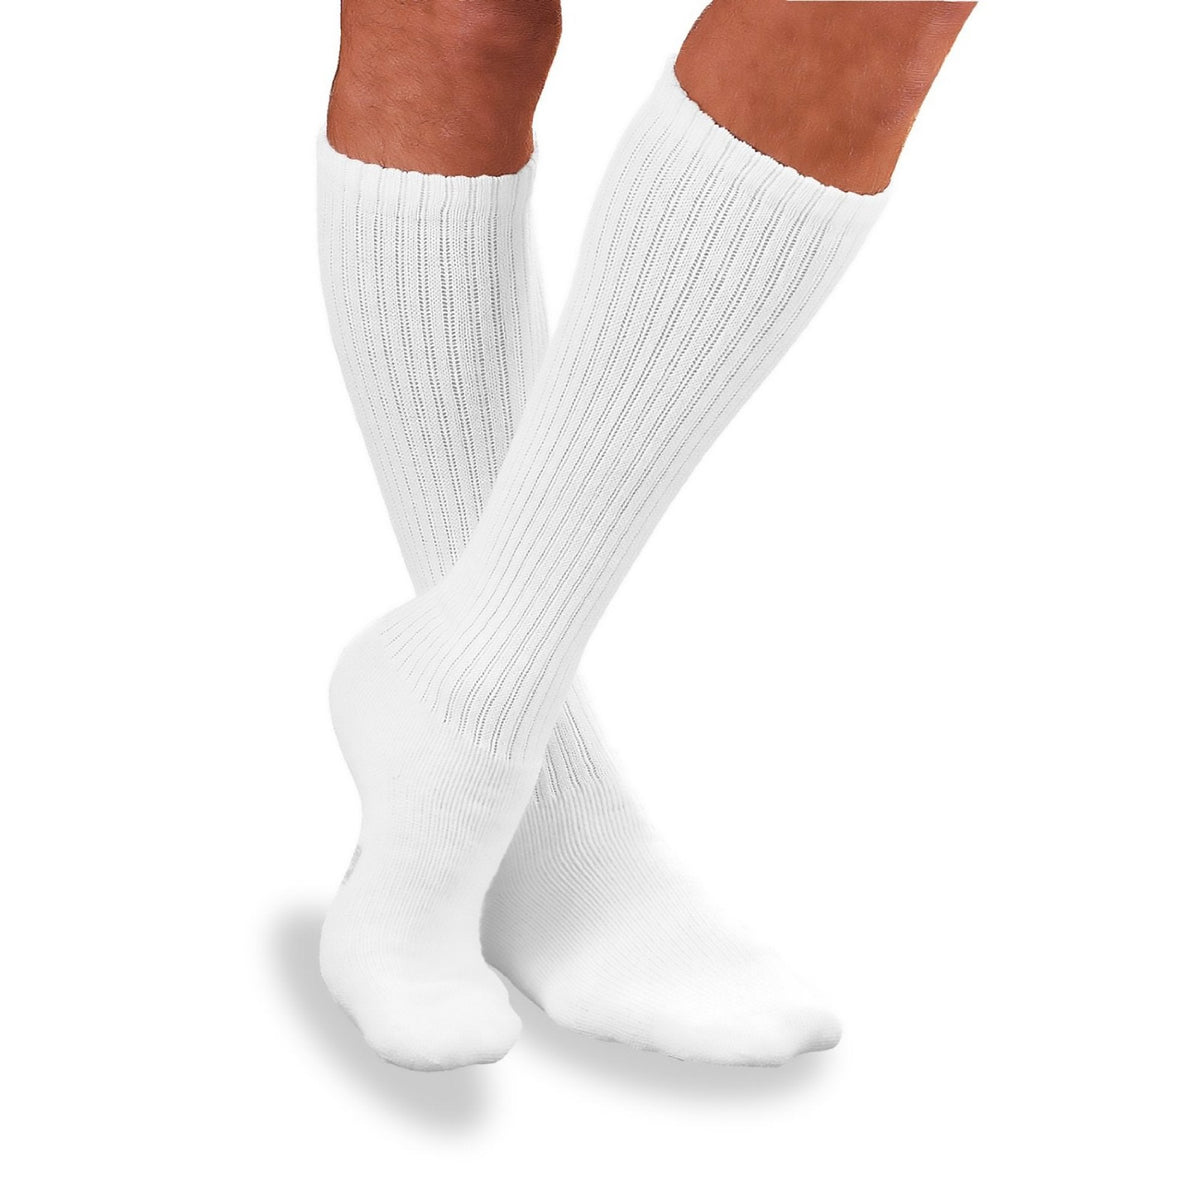 JOBST SensiFoot Diabetic Compression Socks, Knee High, White, Closed Toe, Large, 1 Pair - American Hospital Supply